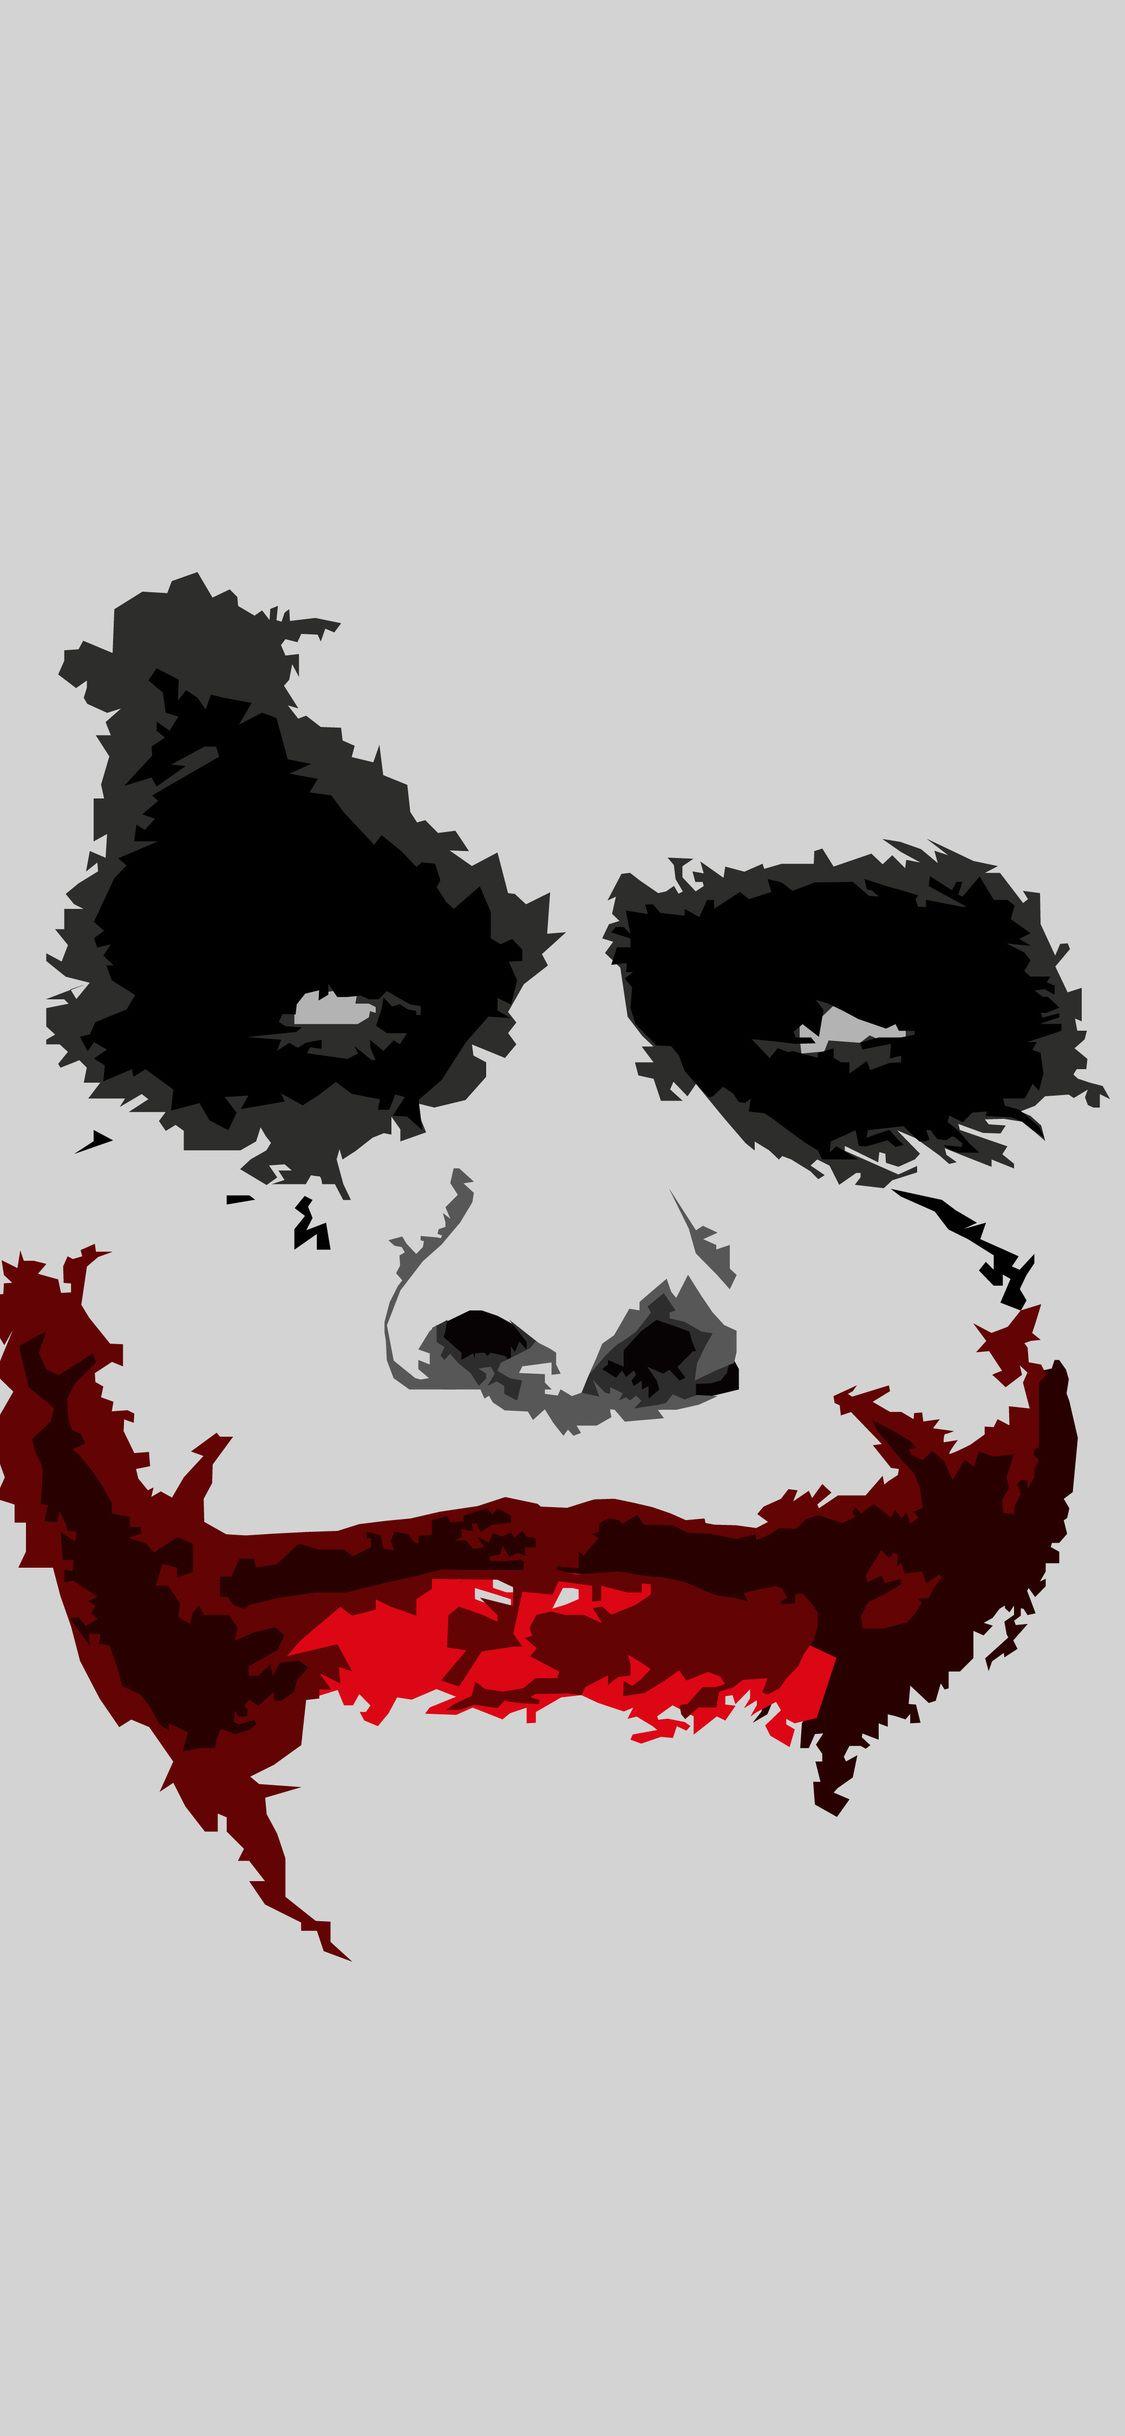 Joker 8k Minimalism iPhone X. Joker iphone wallpaper, Joker